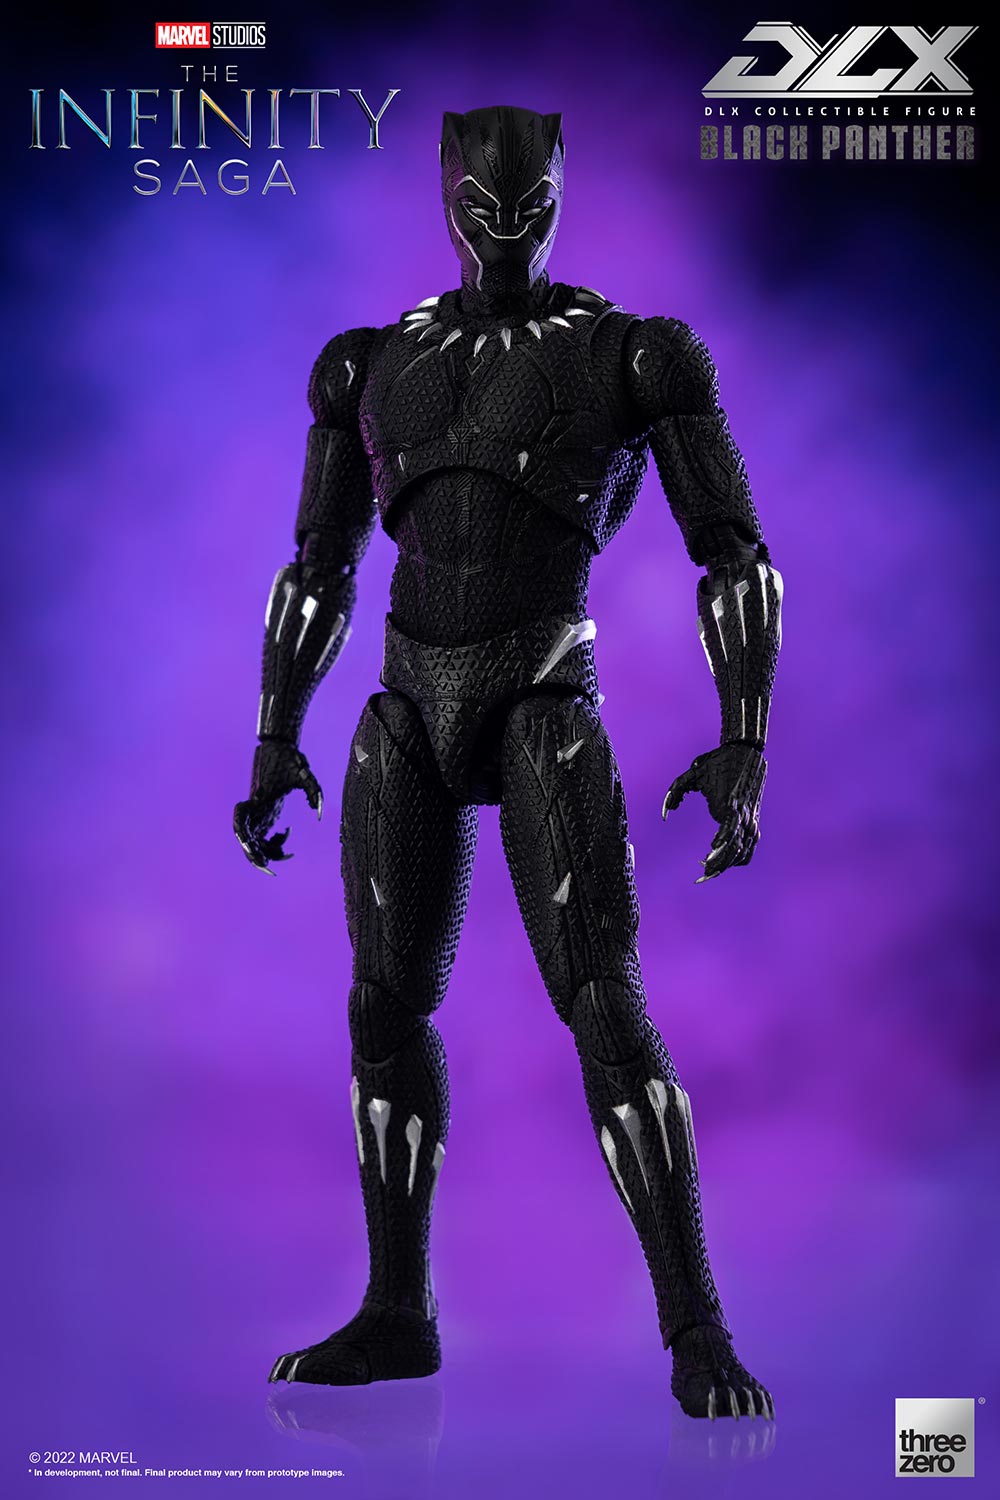 Marvel Studios: The Infinity Saga, DLX Black Panther